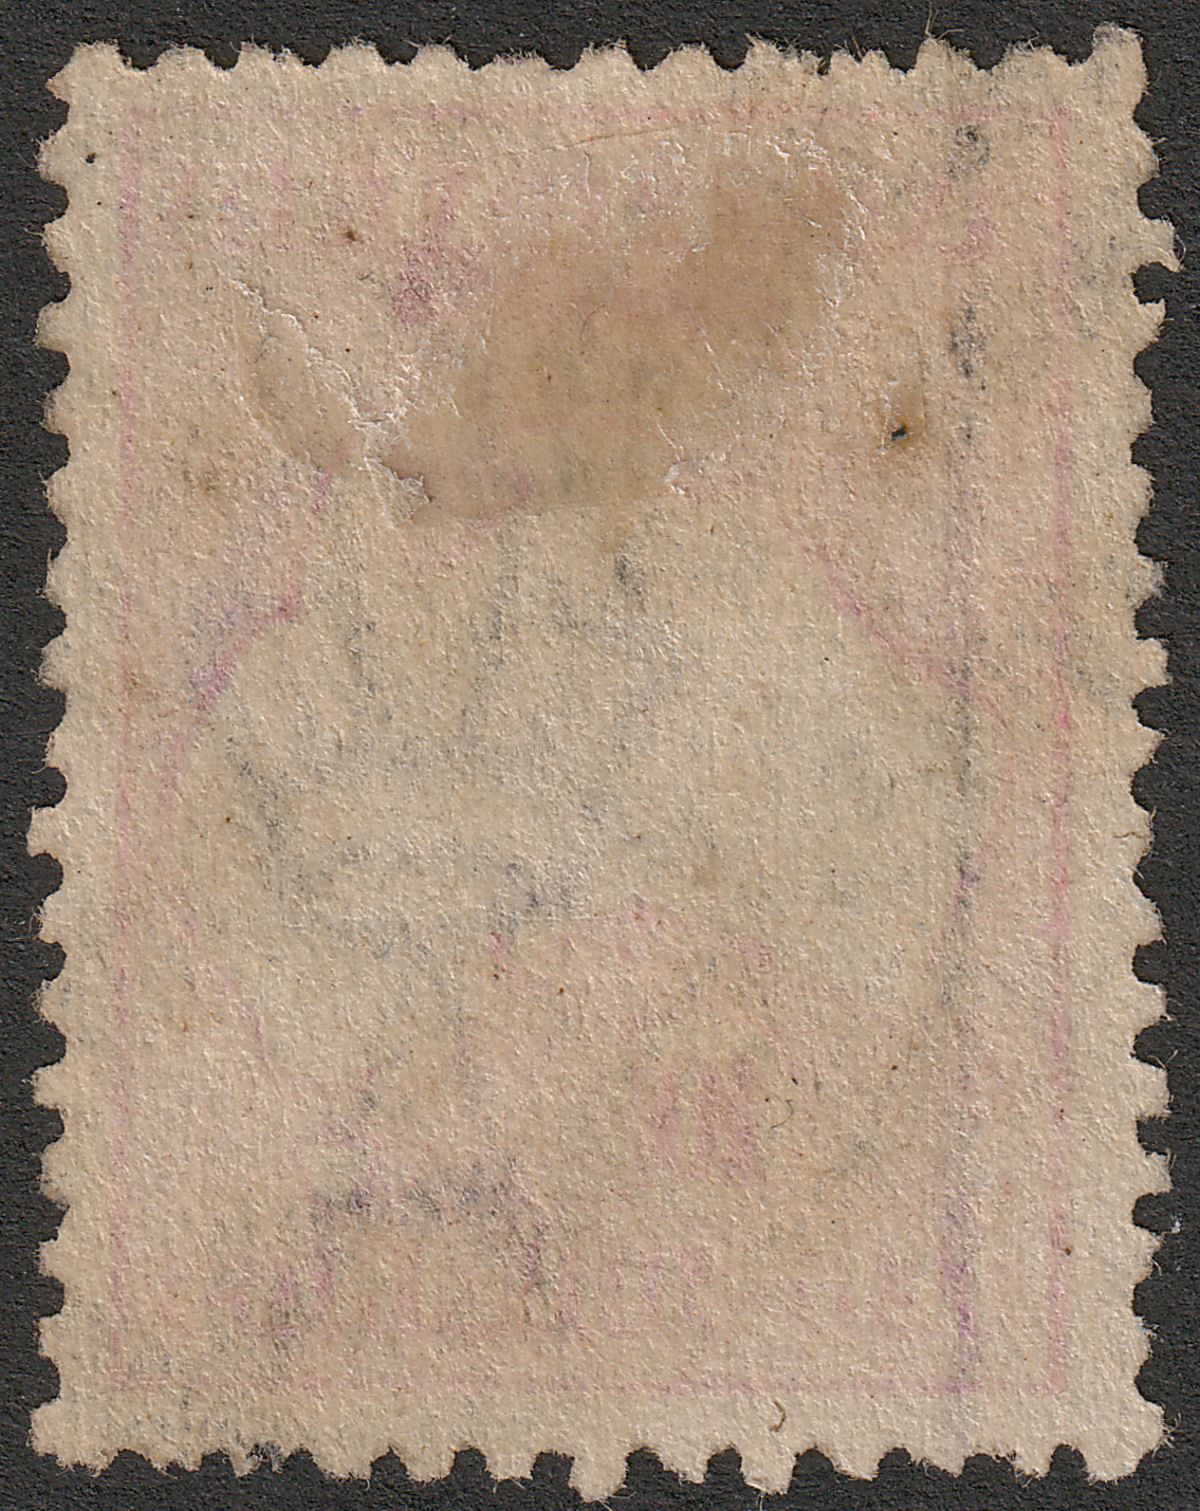 Australia 1918 KGV Roo 10sh Grey + Bright Aniline Pink Used SG43a cat £325